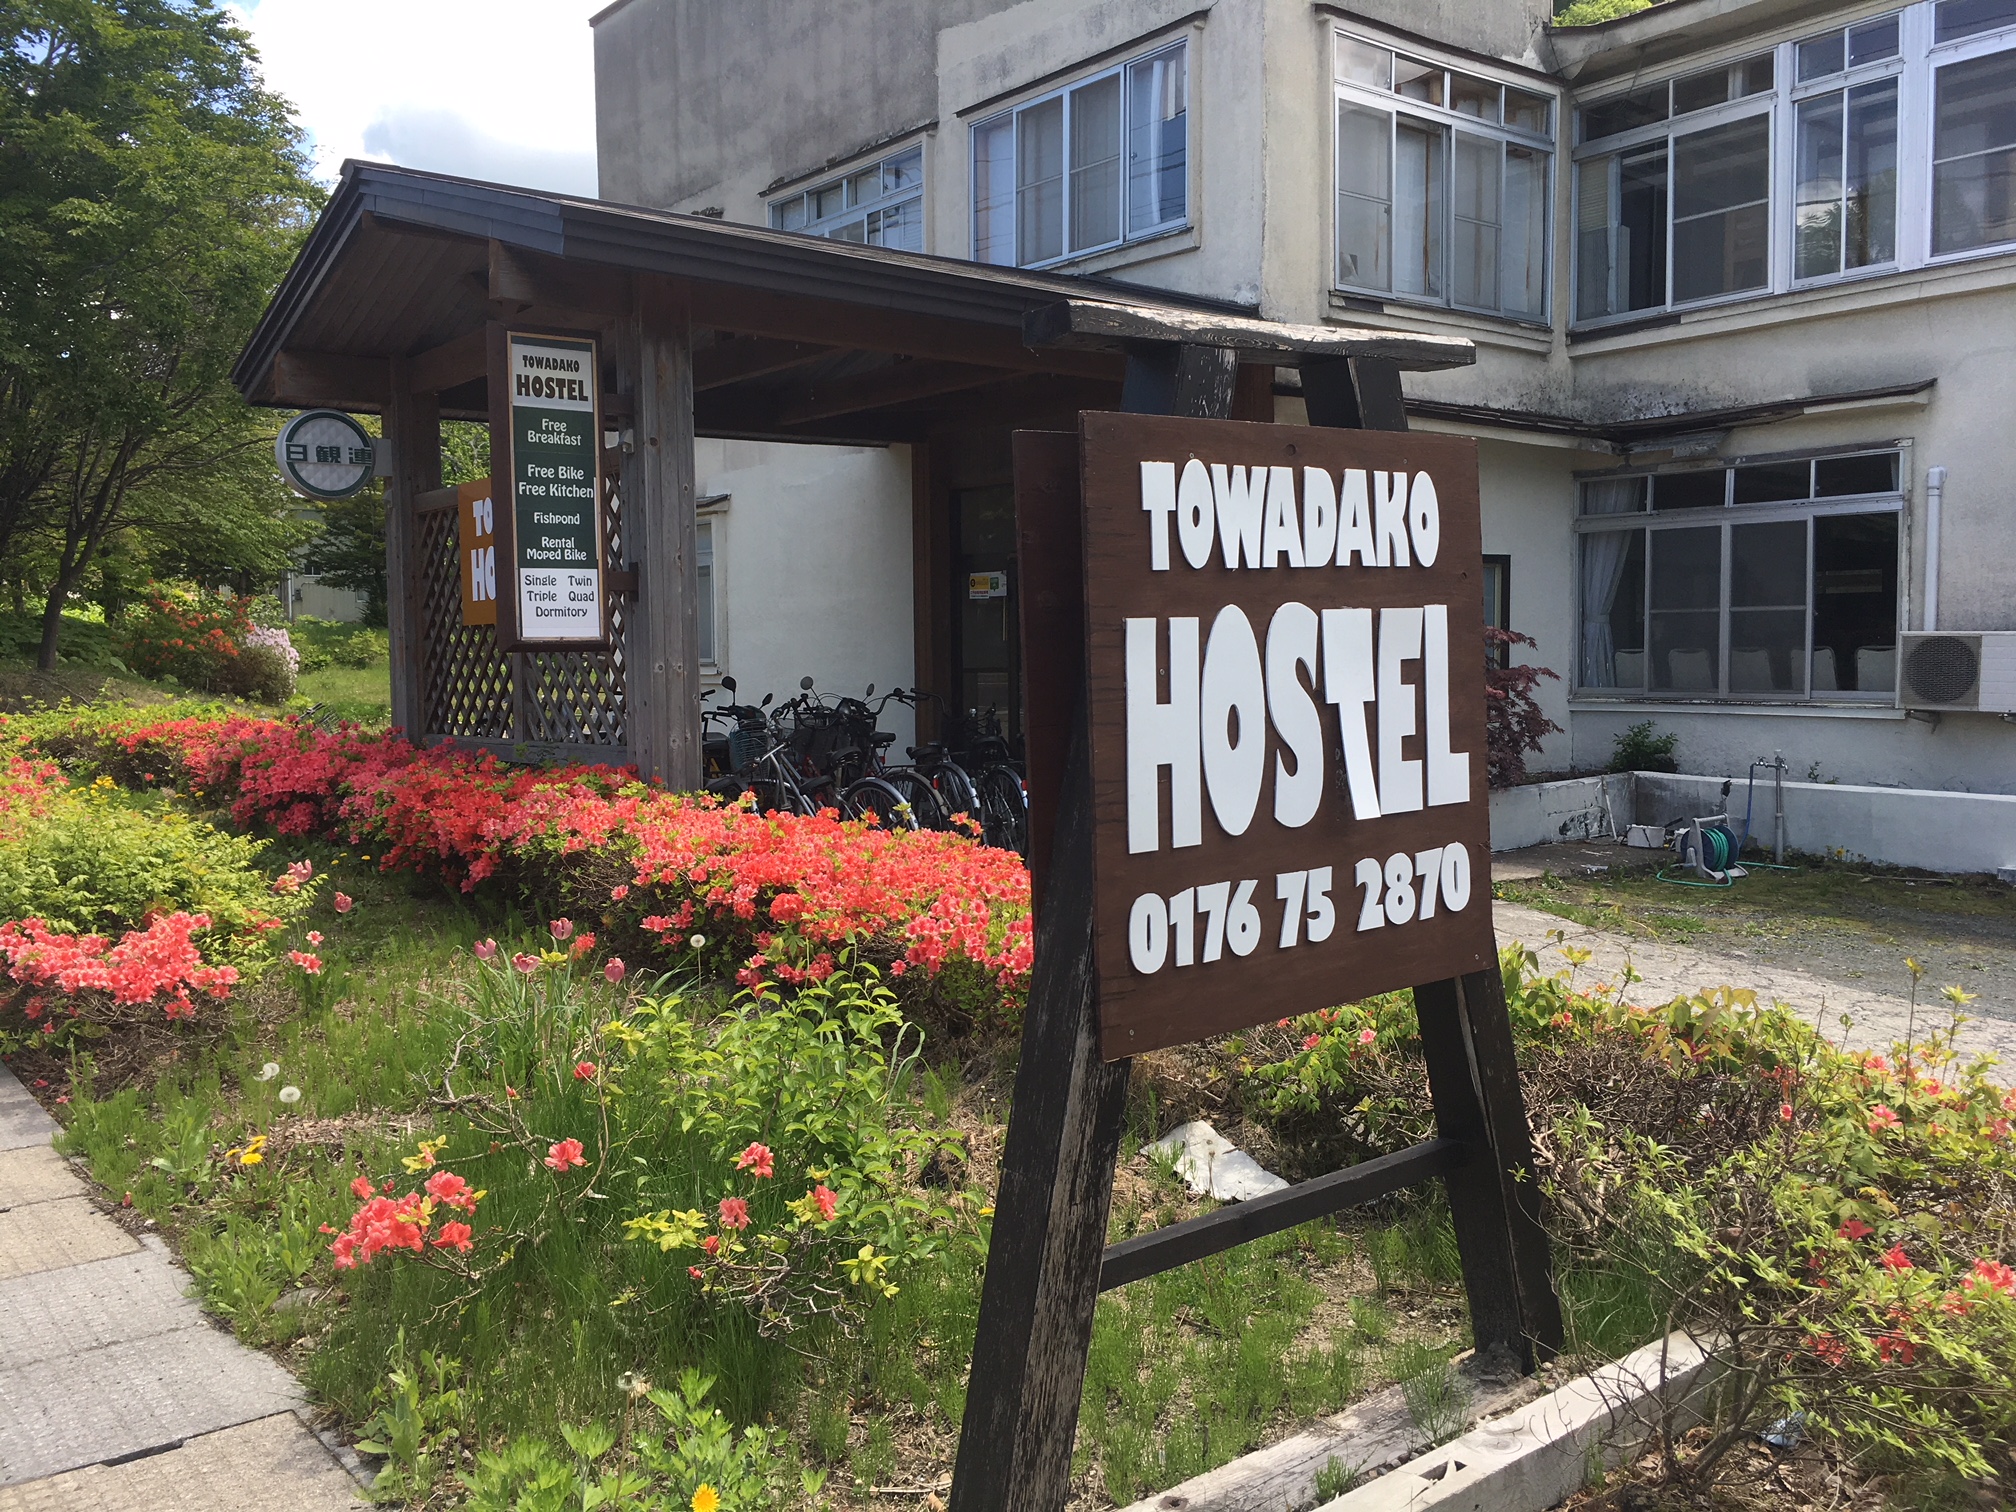 Towadako Hostel image